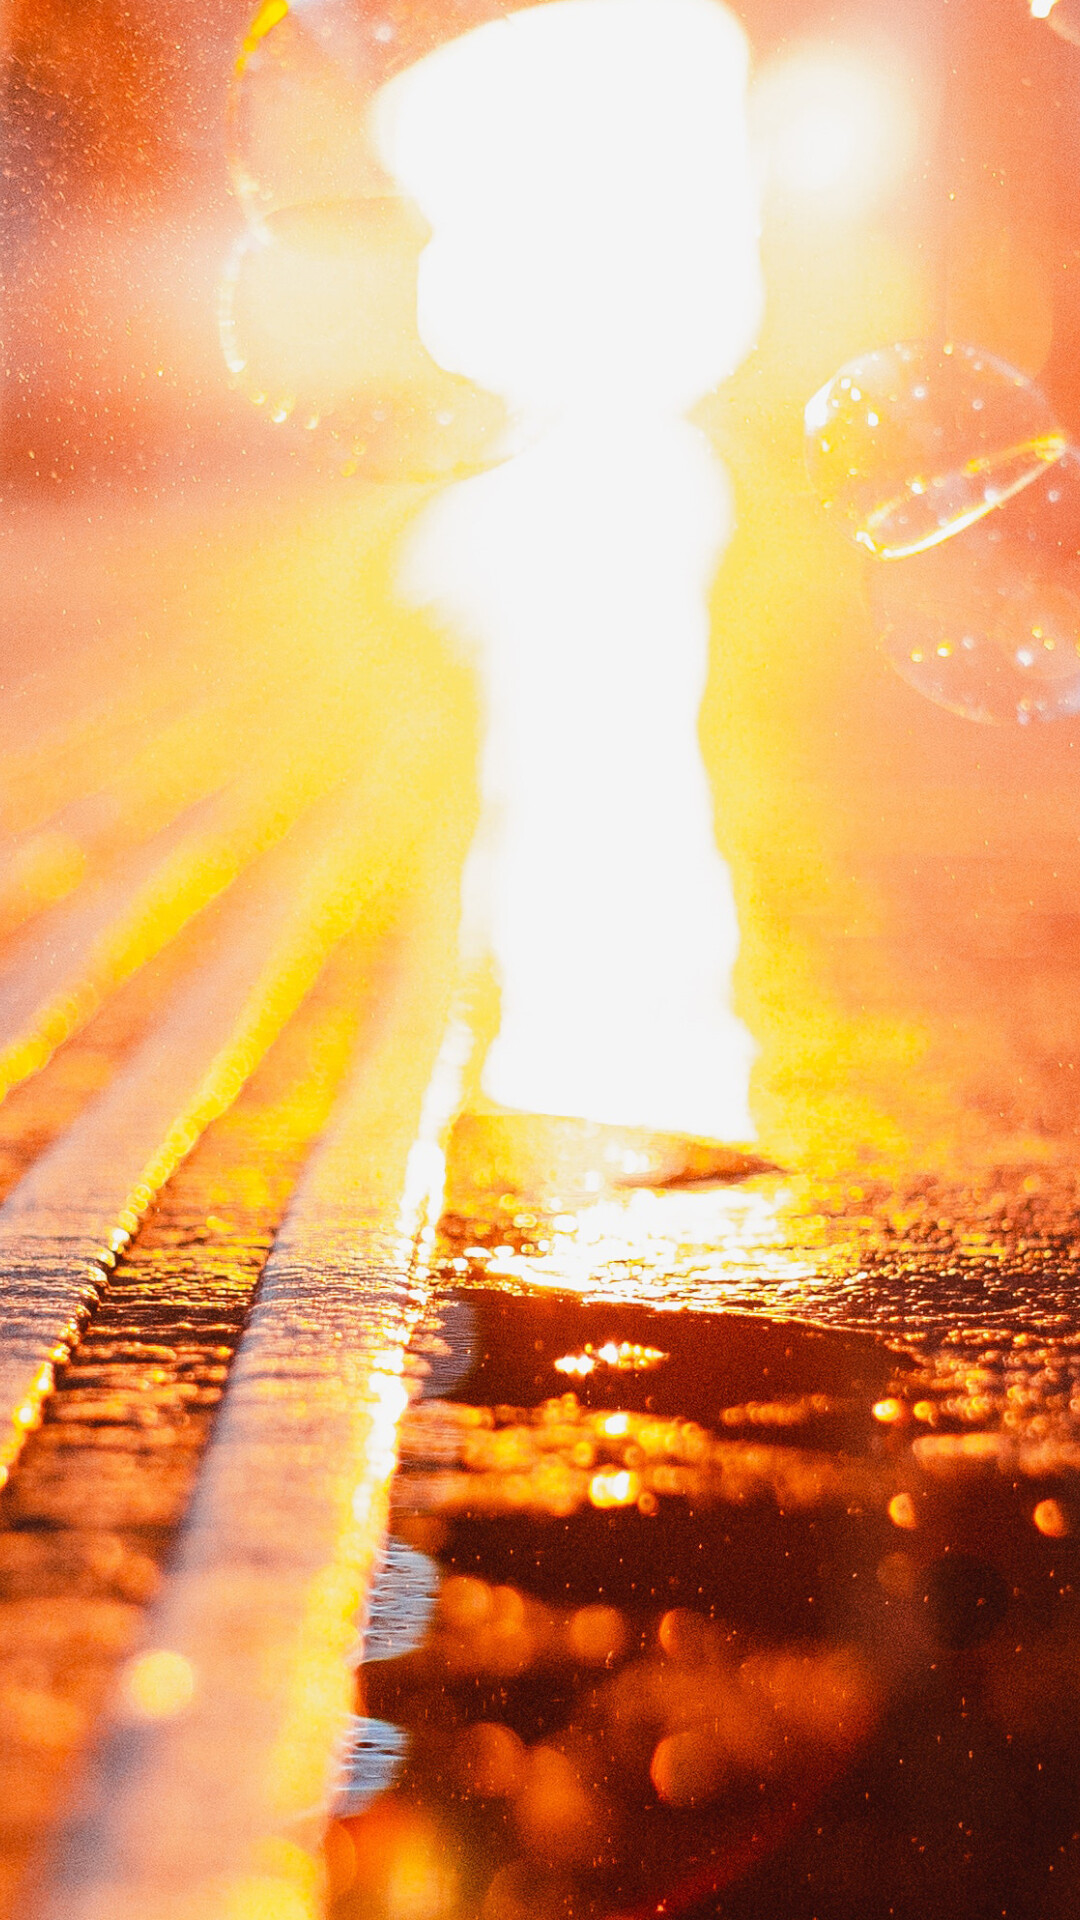 Gold Lights: Gold blurry lights on a road surface, A source of illumination, Sunlight. 1080x1920 Full HD Wallpaper.